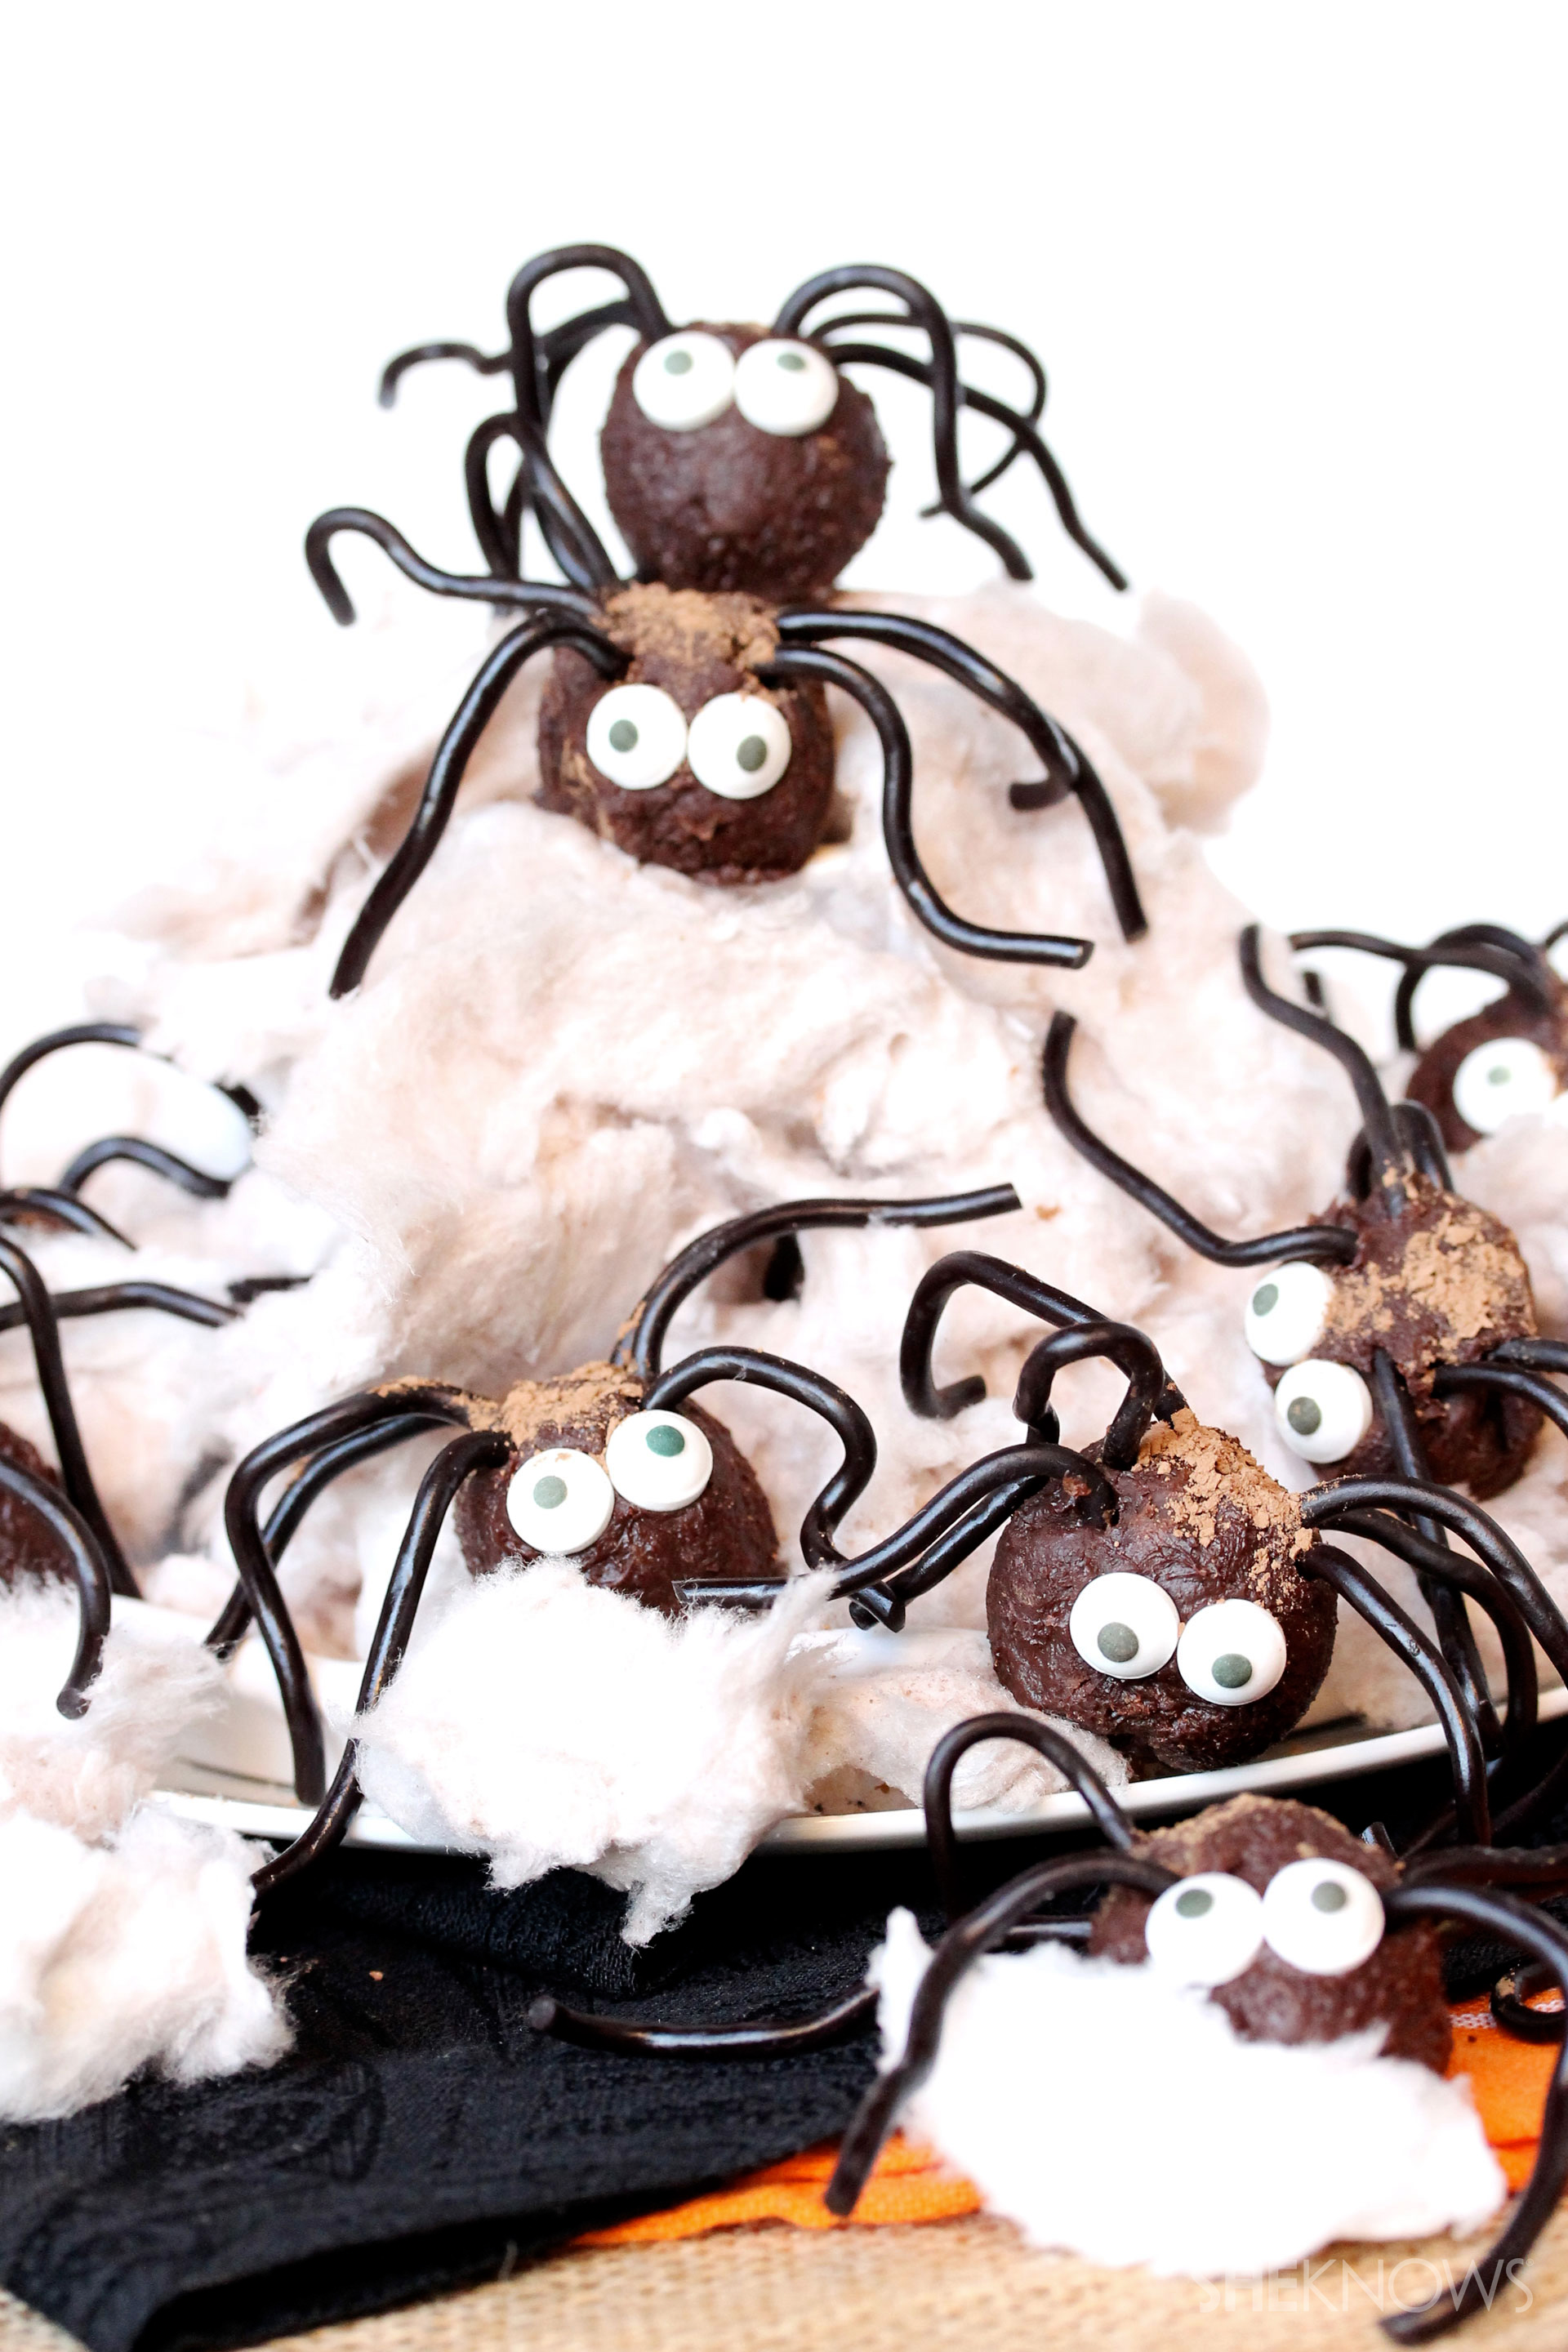 Creepy chocolate spiders in an edible web make an adorable Halloween treat